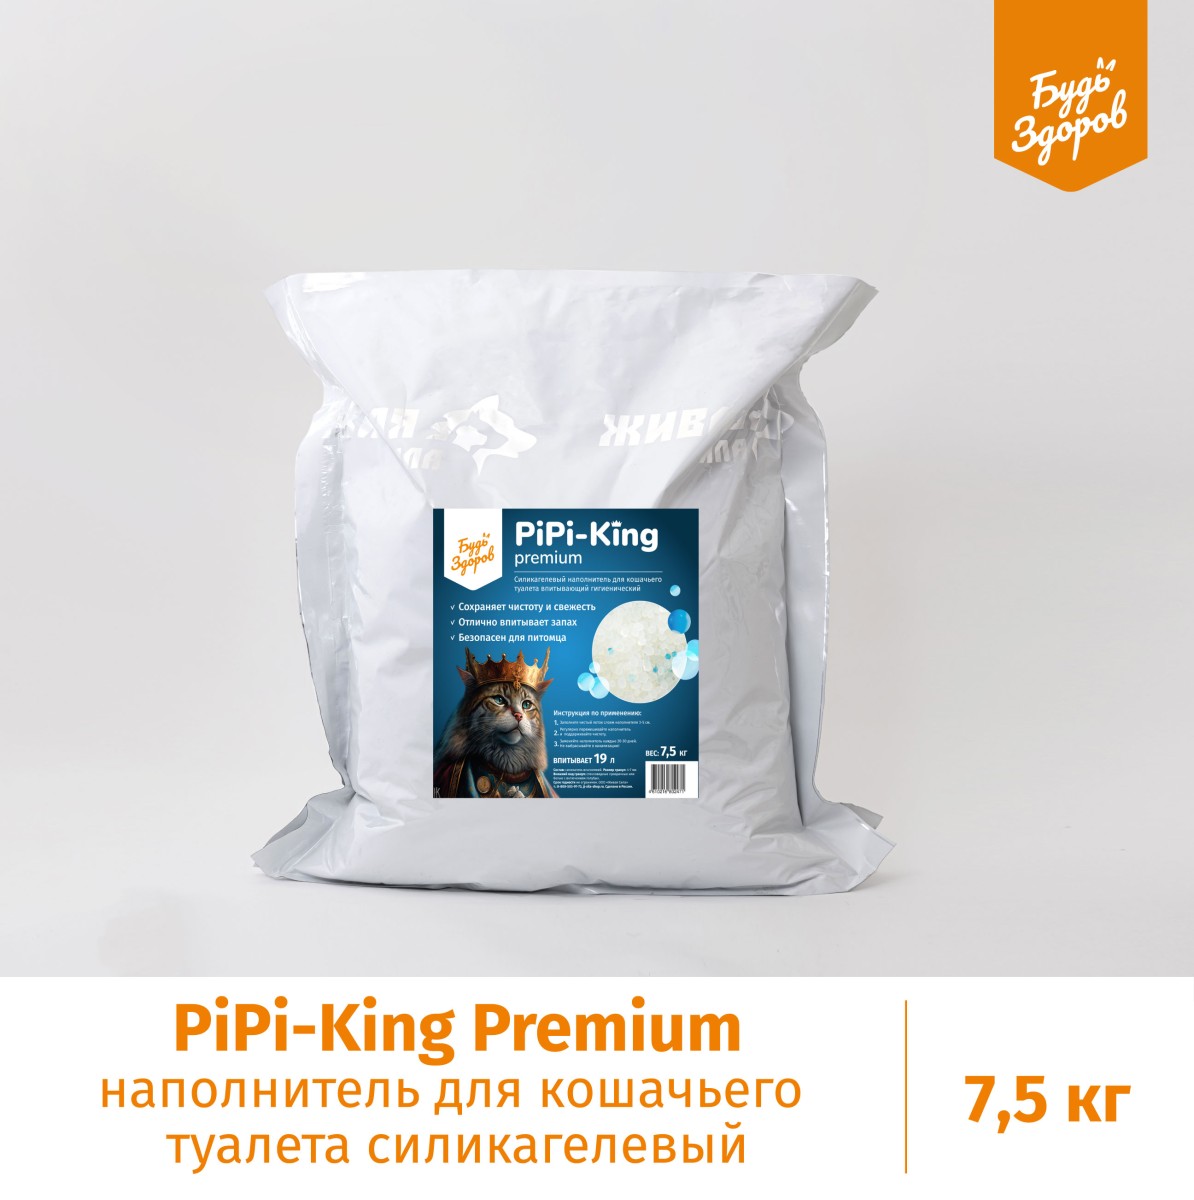 PIPI-King Premium